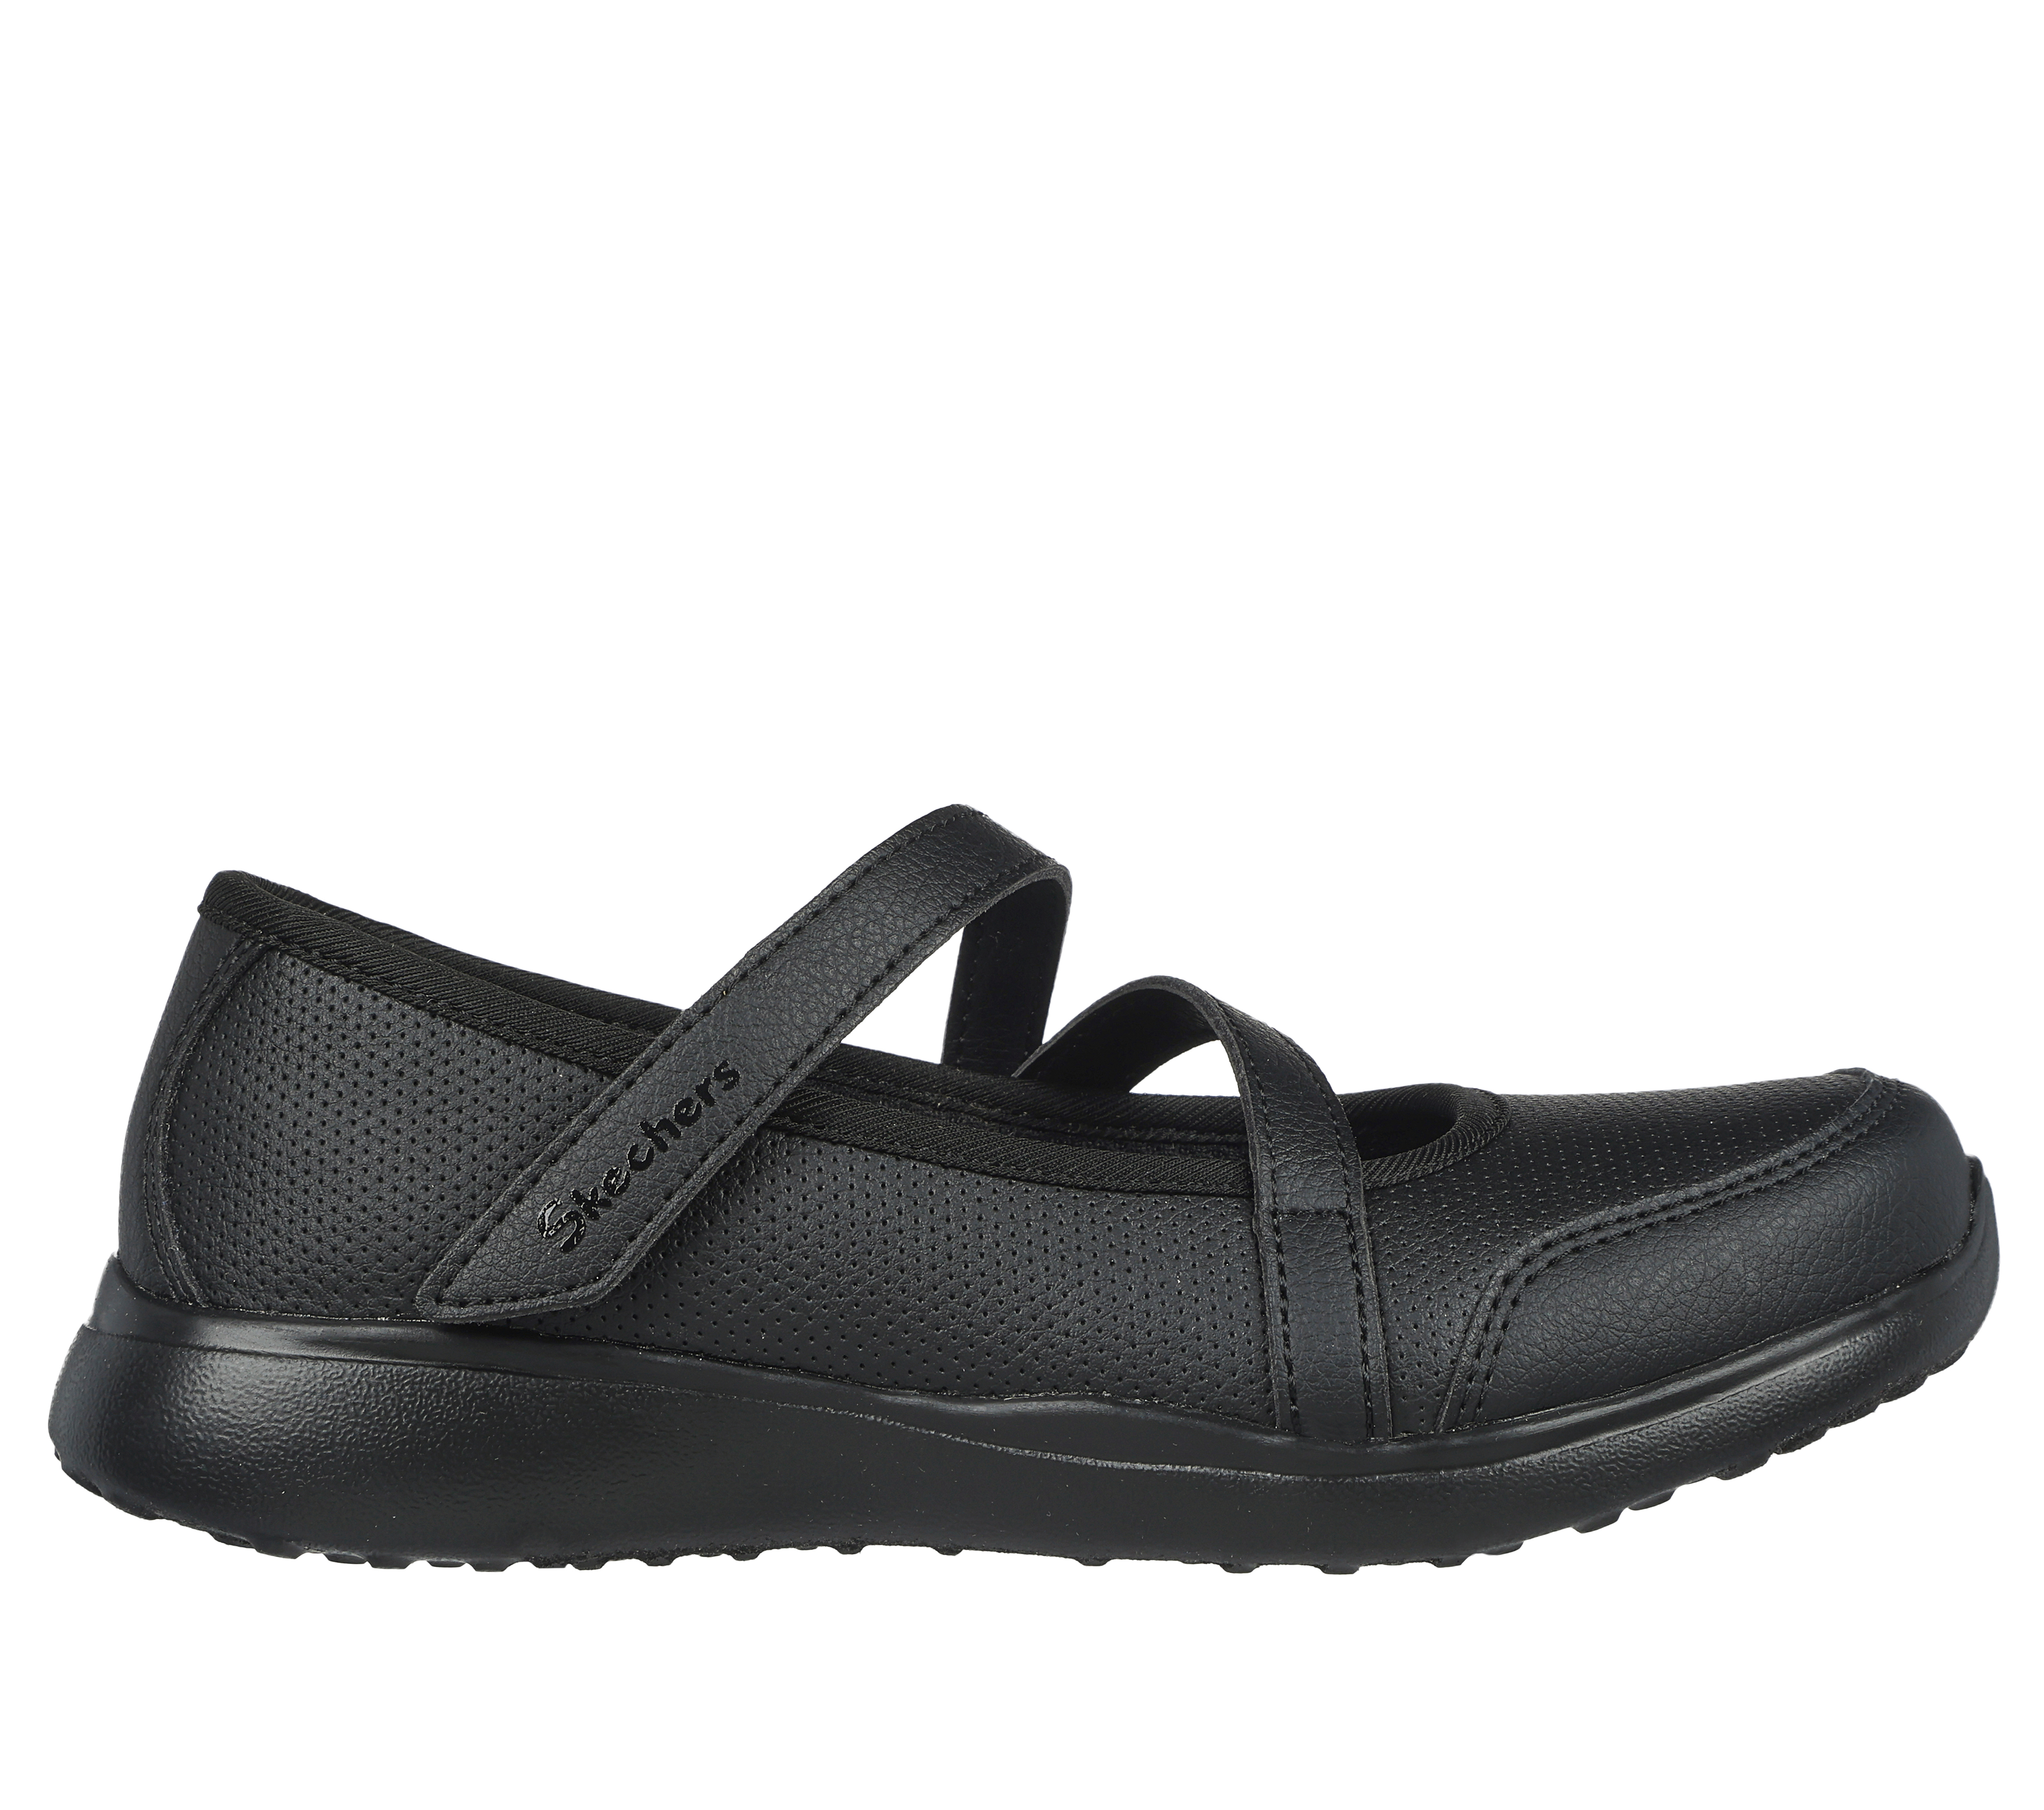 Skechers Girl's Microstrides - School Bus Kicks Shoes Size 11.0 Black Synthetic/Textile Machine Washable